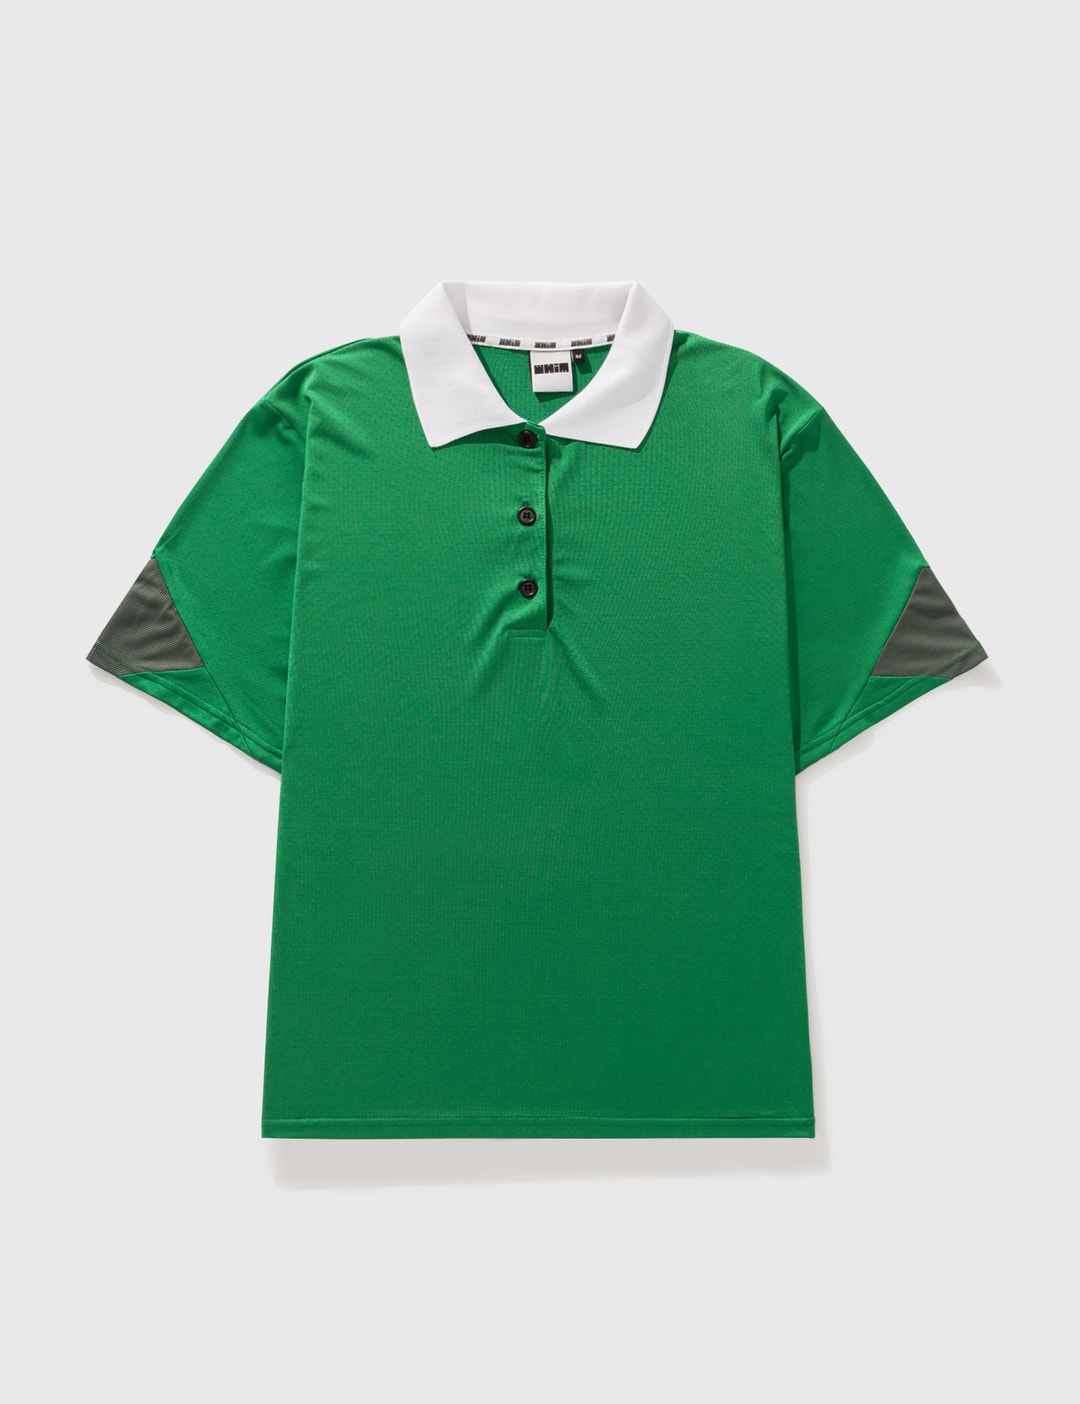 Micro Mesh Tour Golf Shirt Placeholder Image